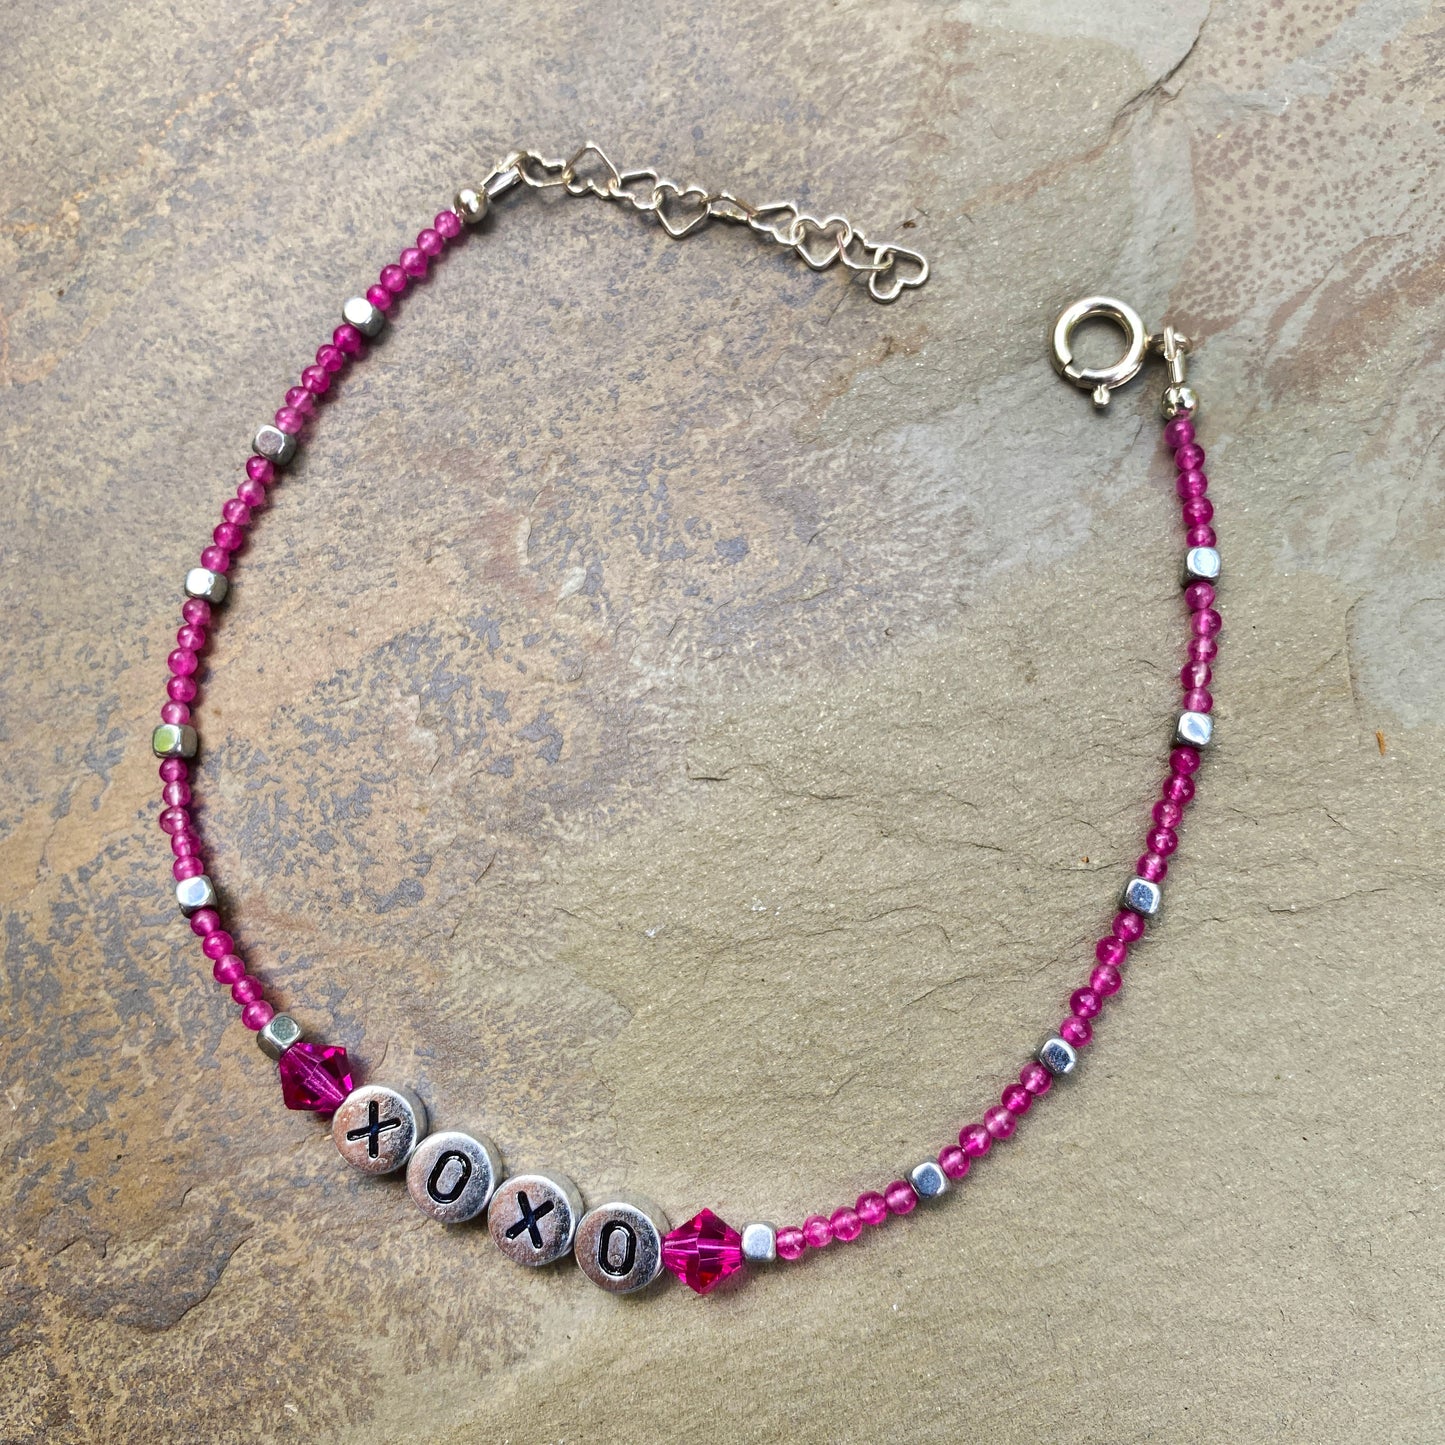 Pink agate, hematite, and Swarovski Crystal “xoxo” sterling silver anklet